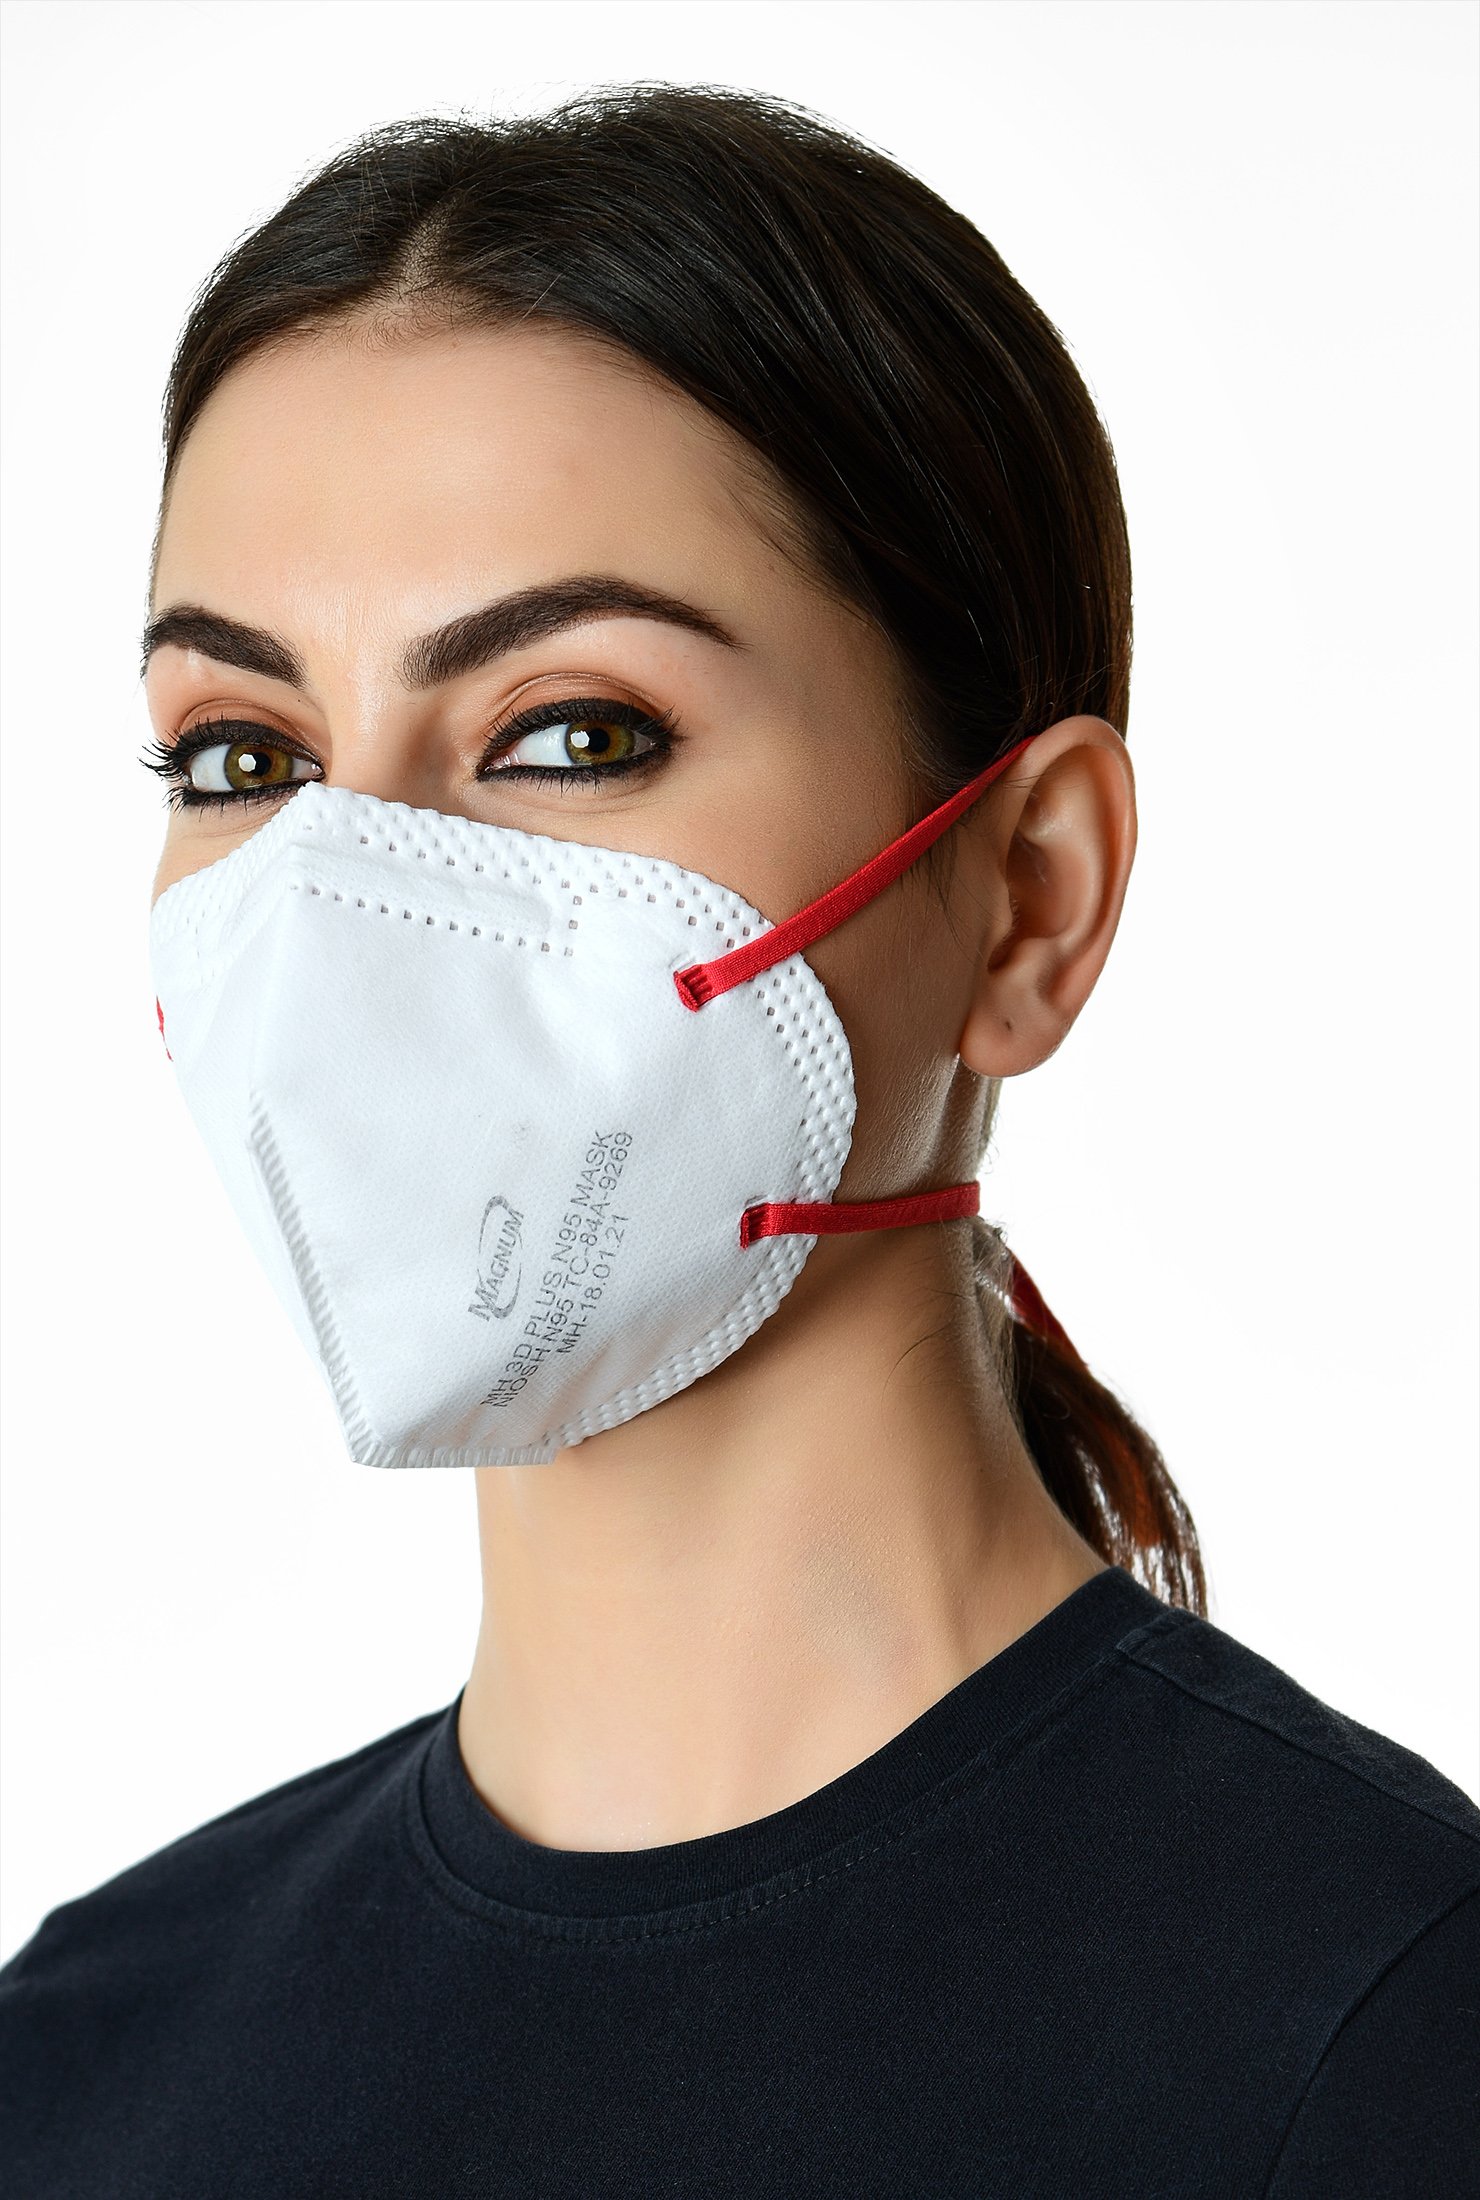 High-quality, NIOSH-certified N95 filtering particulate facepiece respirator.